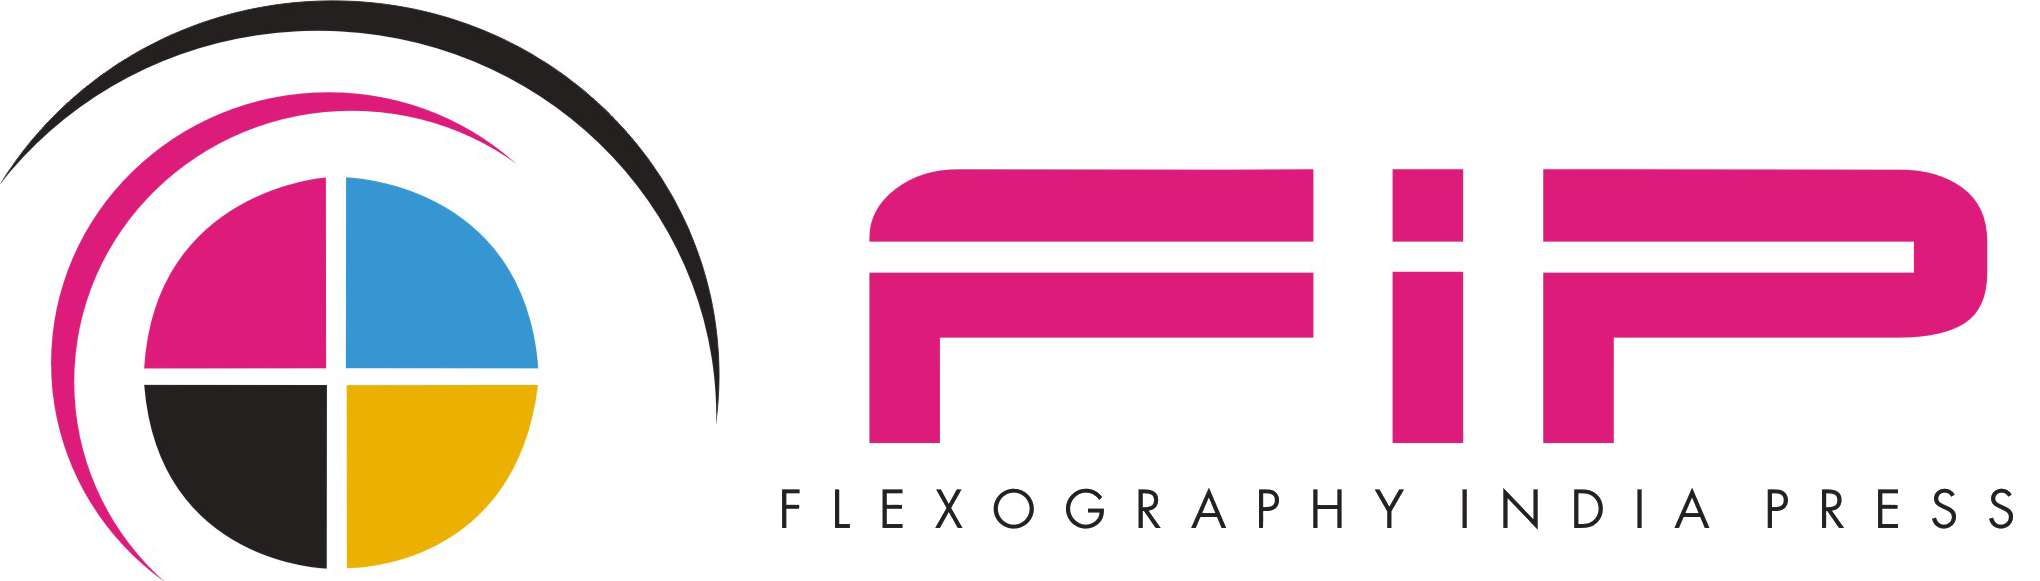 Flexography India Press By Flexo Photopolymer Plate Making Machine Equipment